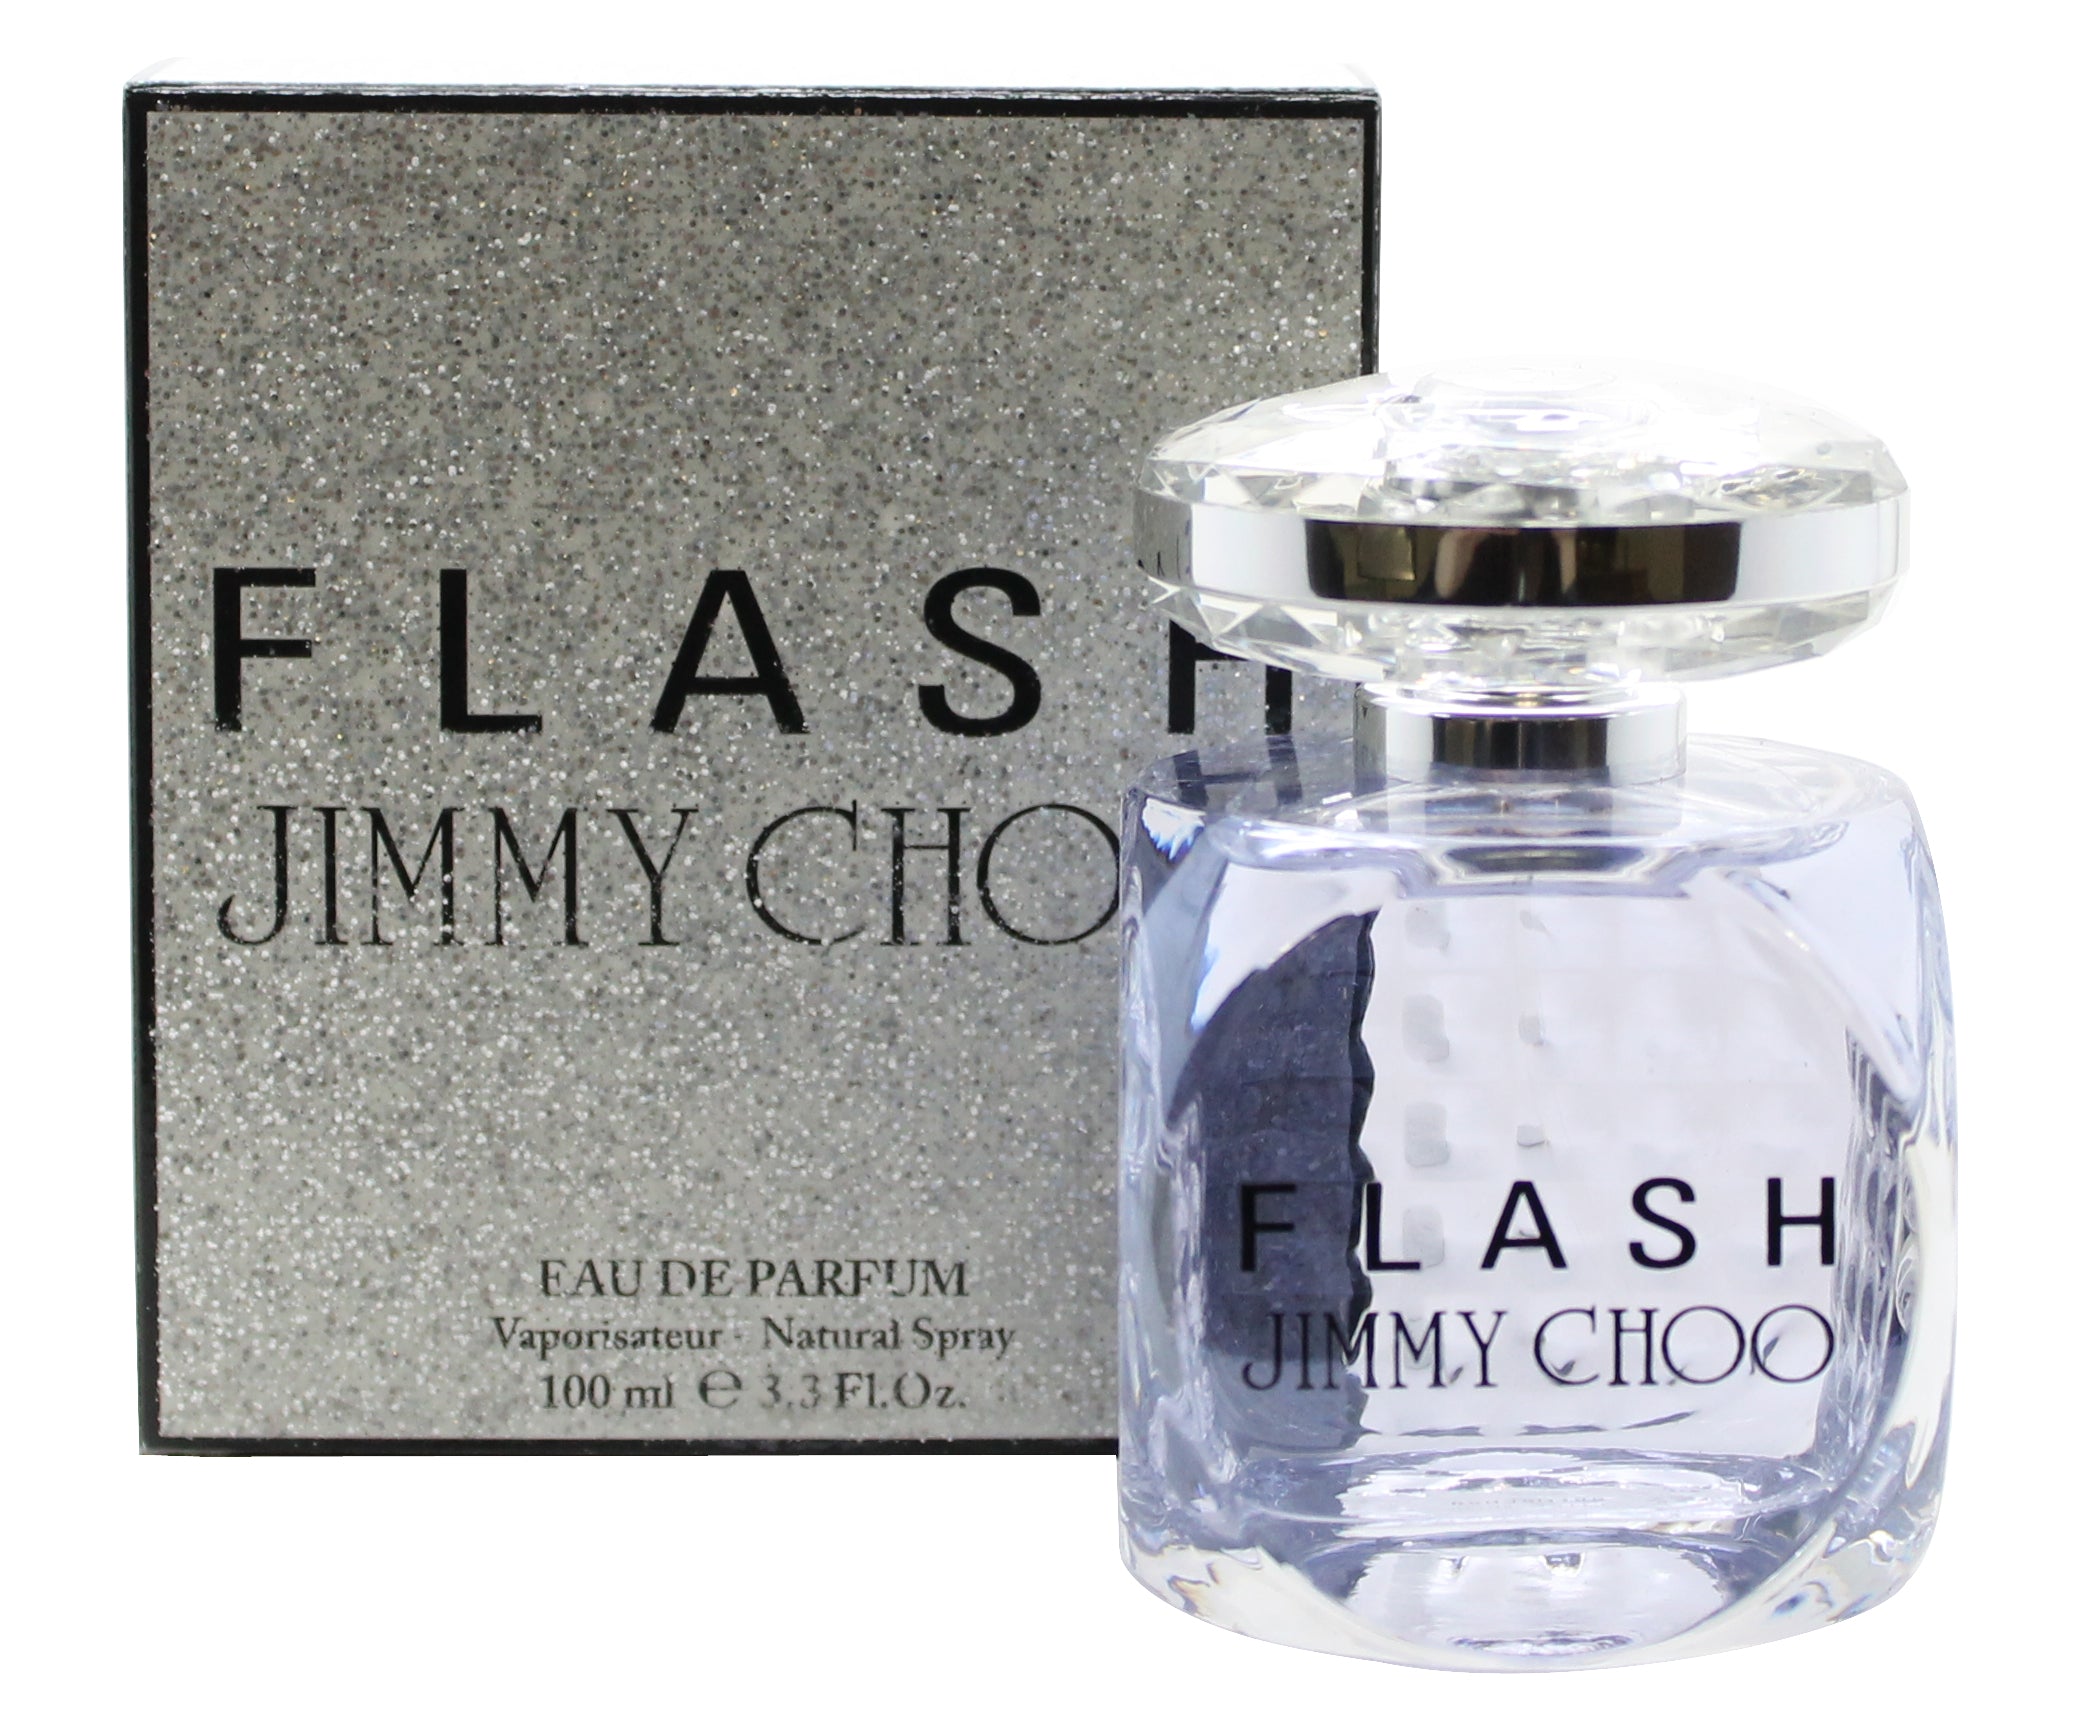 View Jimmy Choo Flash Eau de Parfum 100ml Spray information